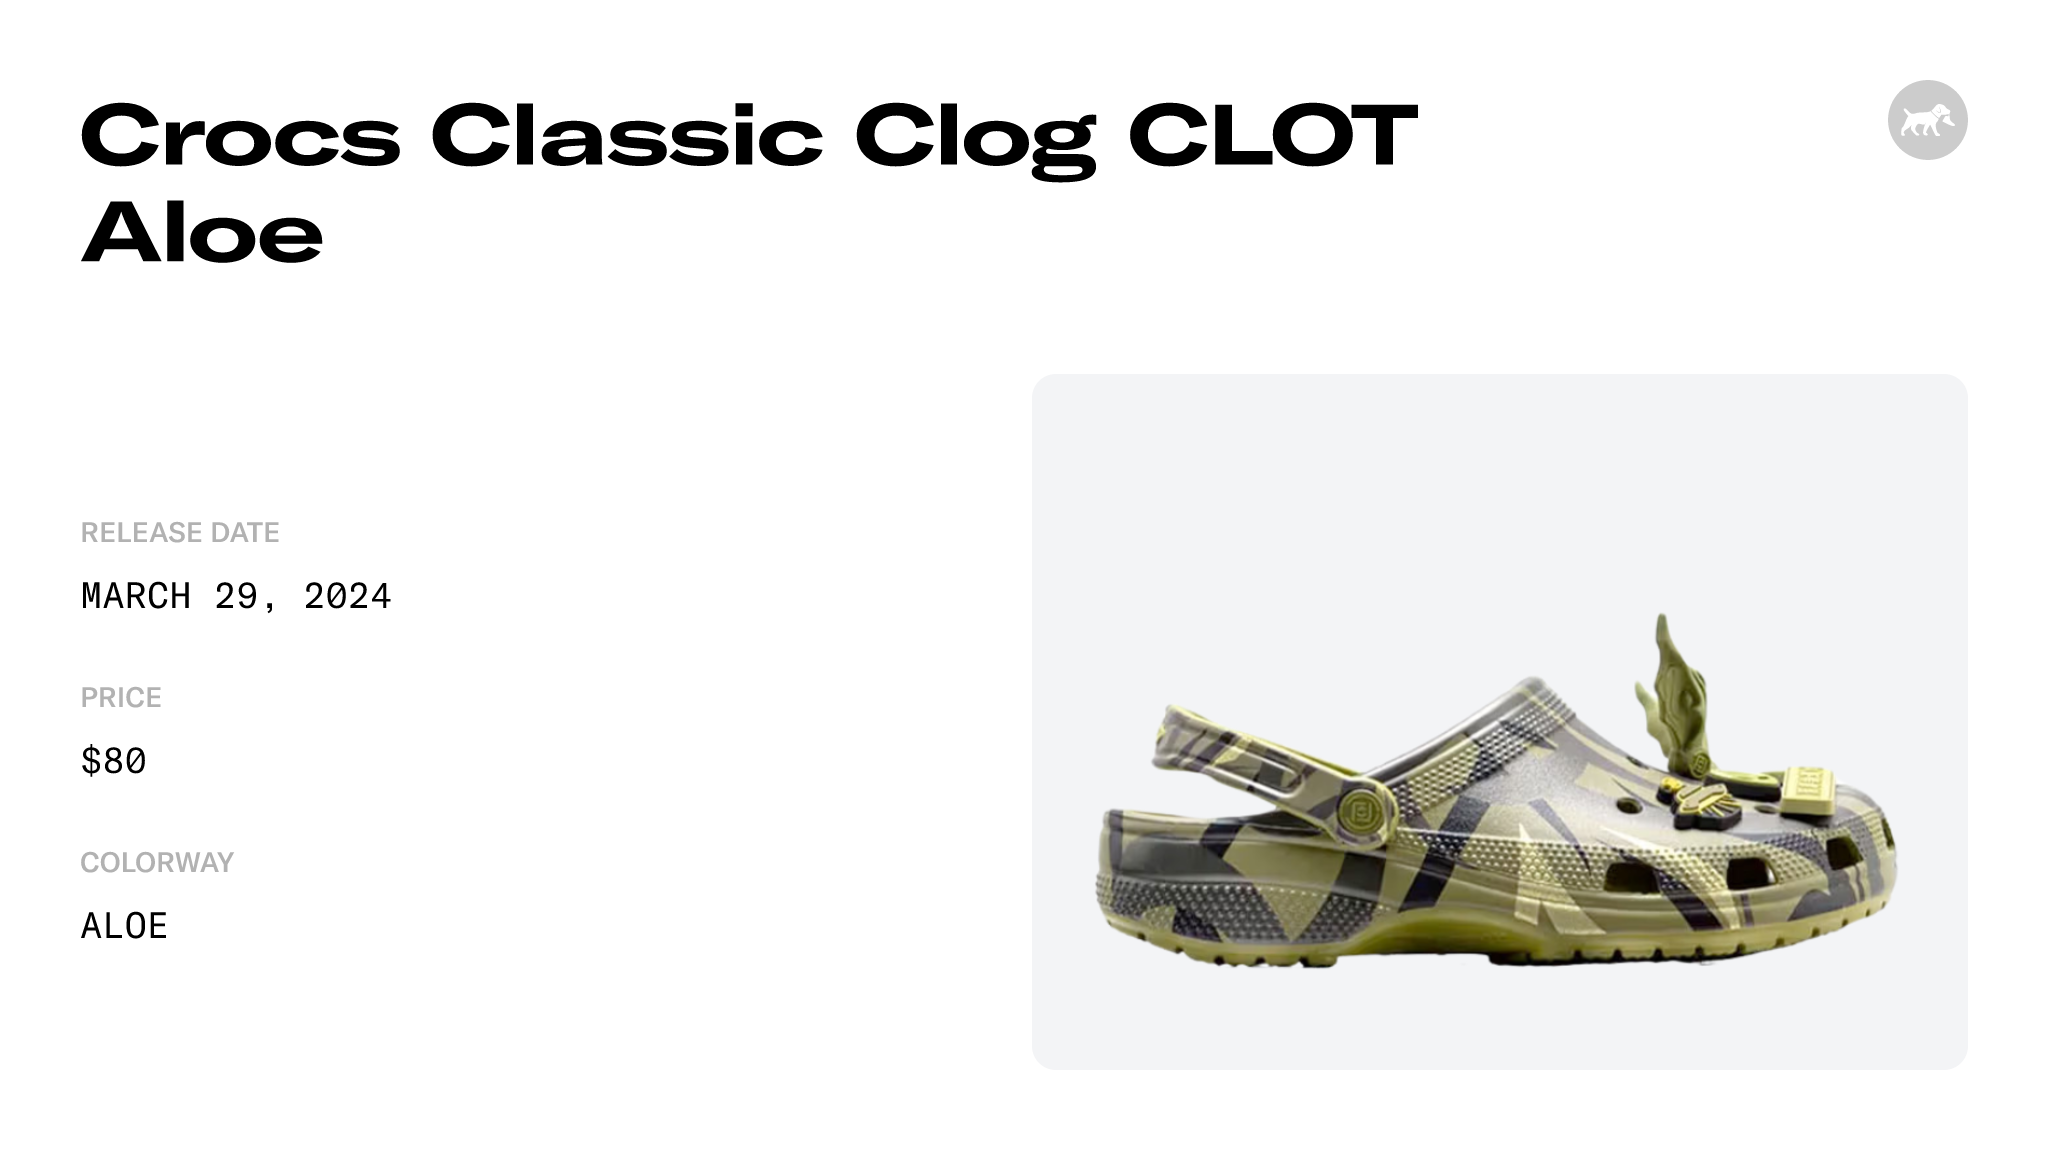 Crocs Classic Clog CLOT Aloe - 208700-3UA Raffles and Release Date